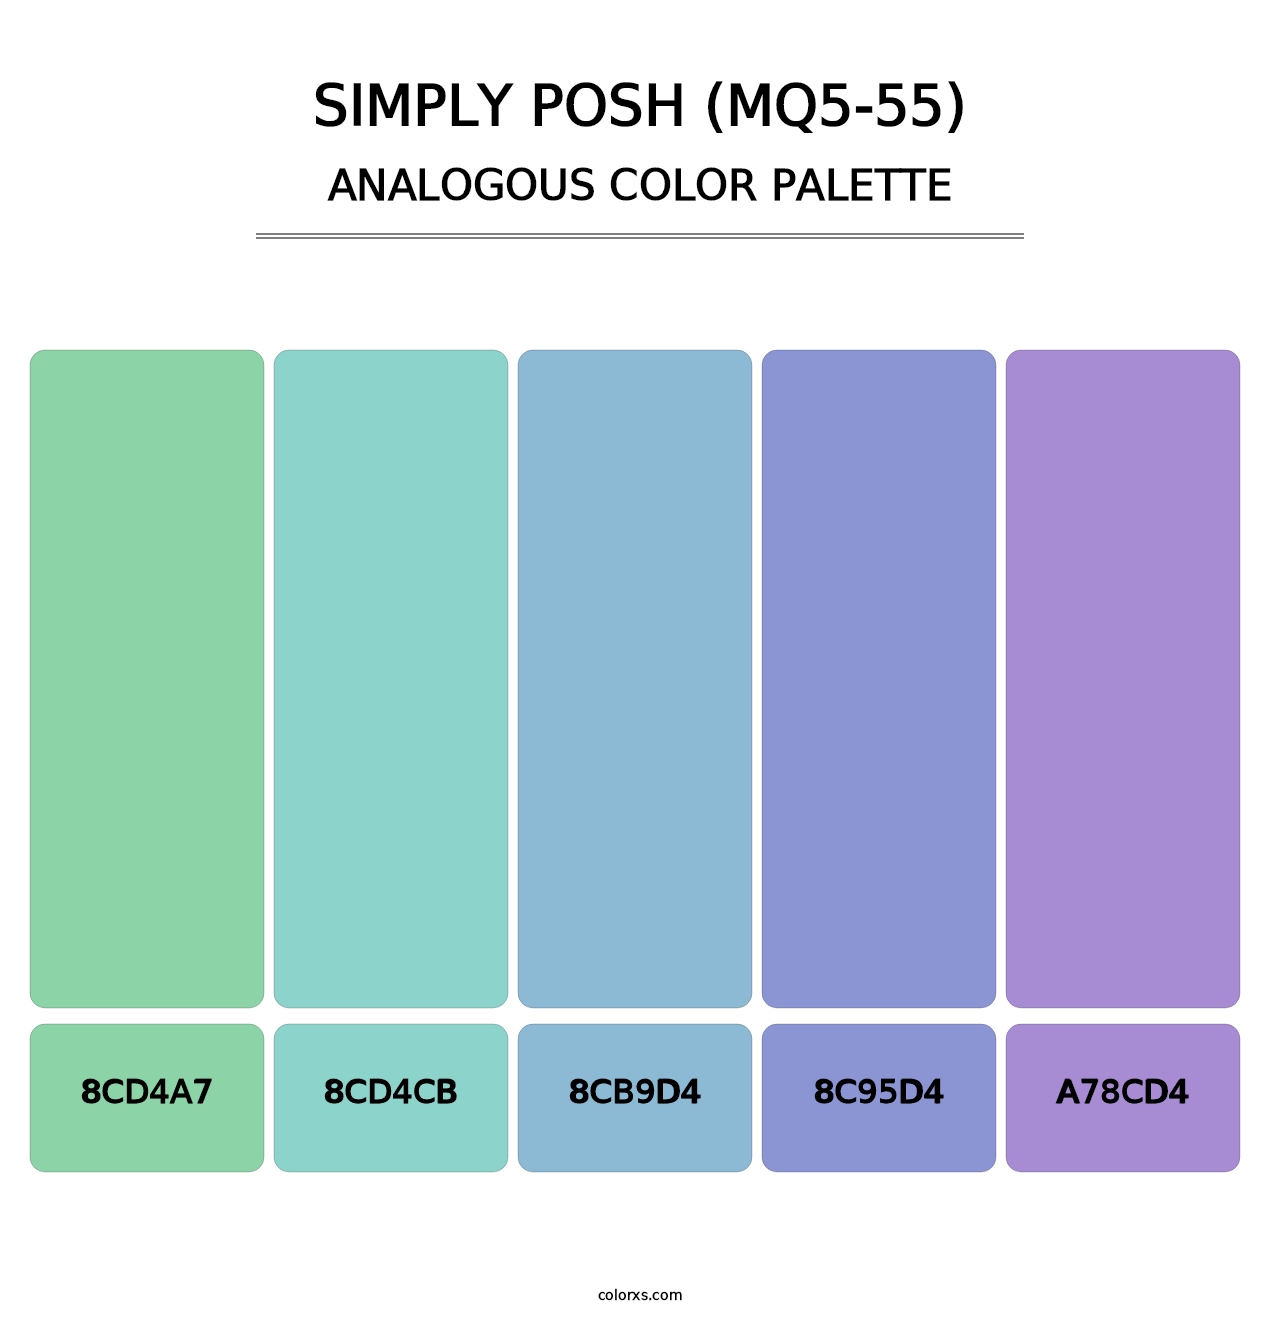 Simply Posh (MQ5-55) - Analogous Color Palette